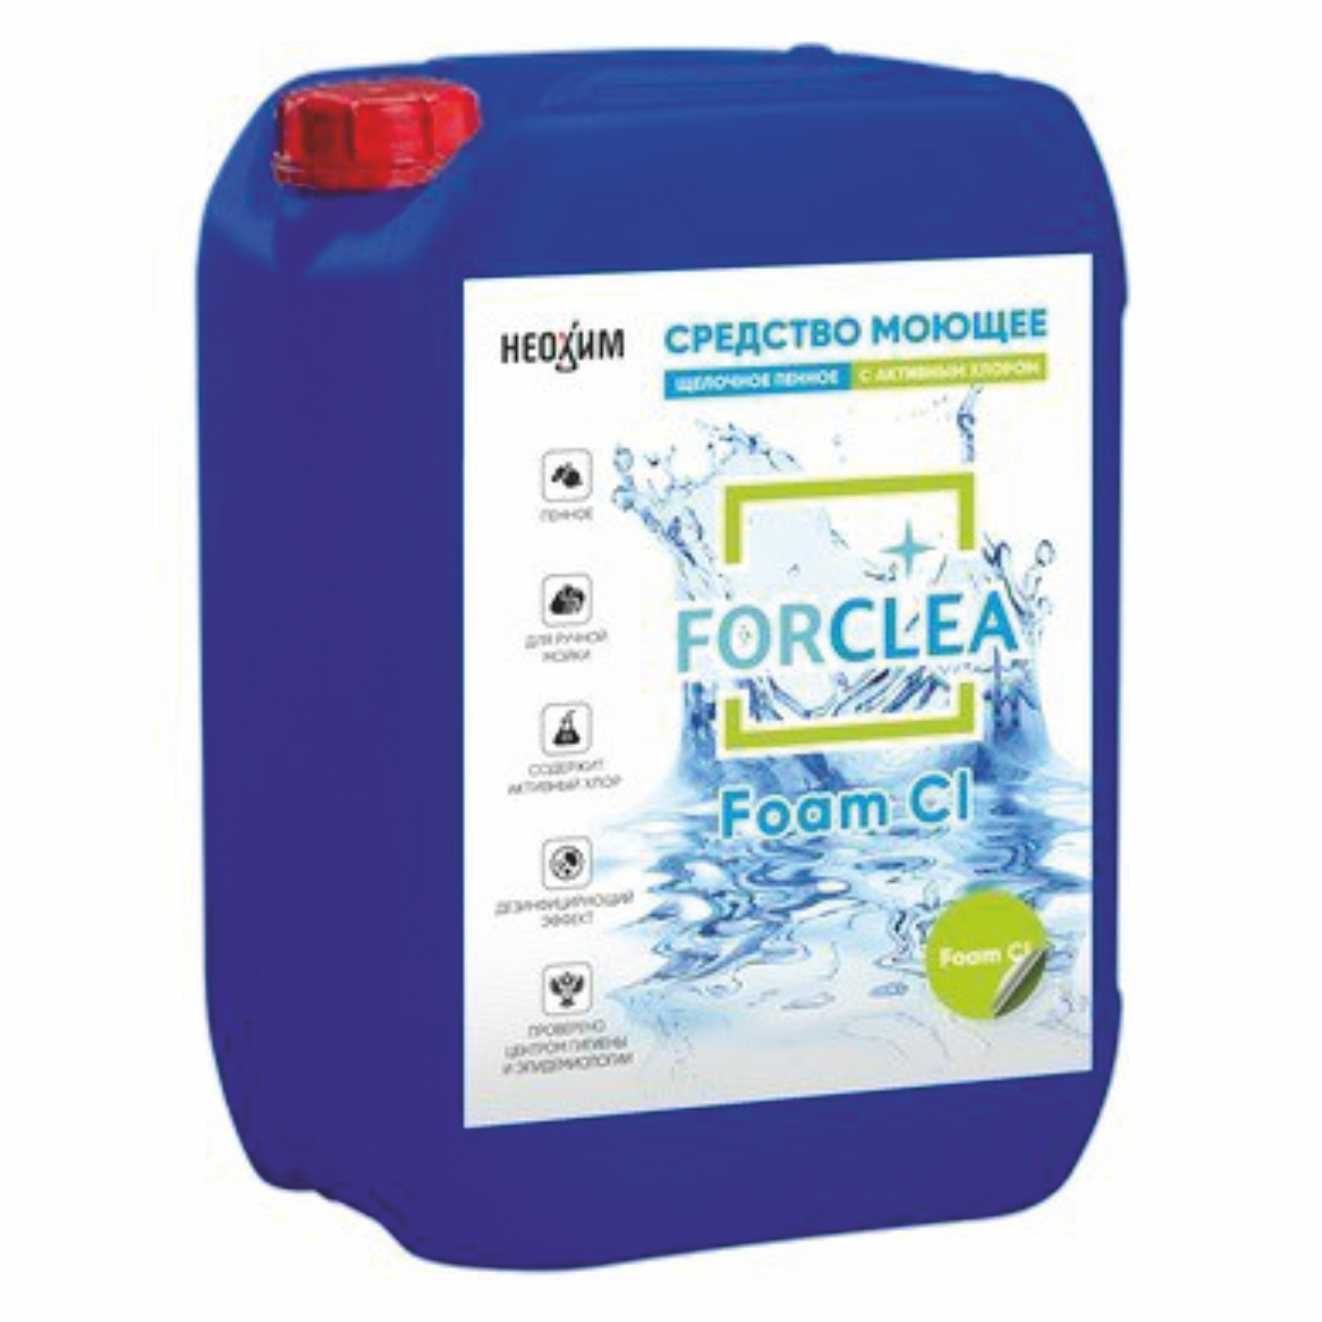 Средство моющее FORCLEA Foam Cl | 10 л